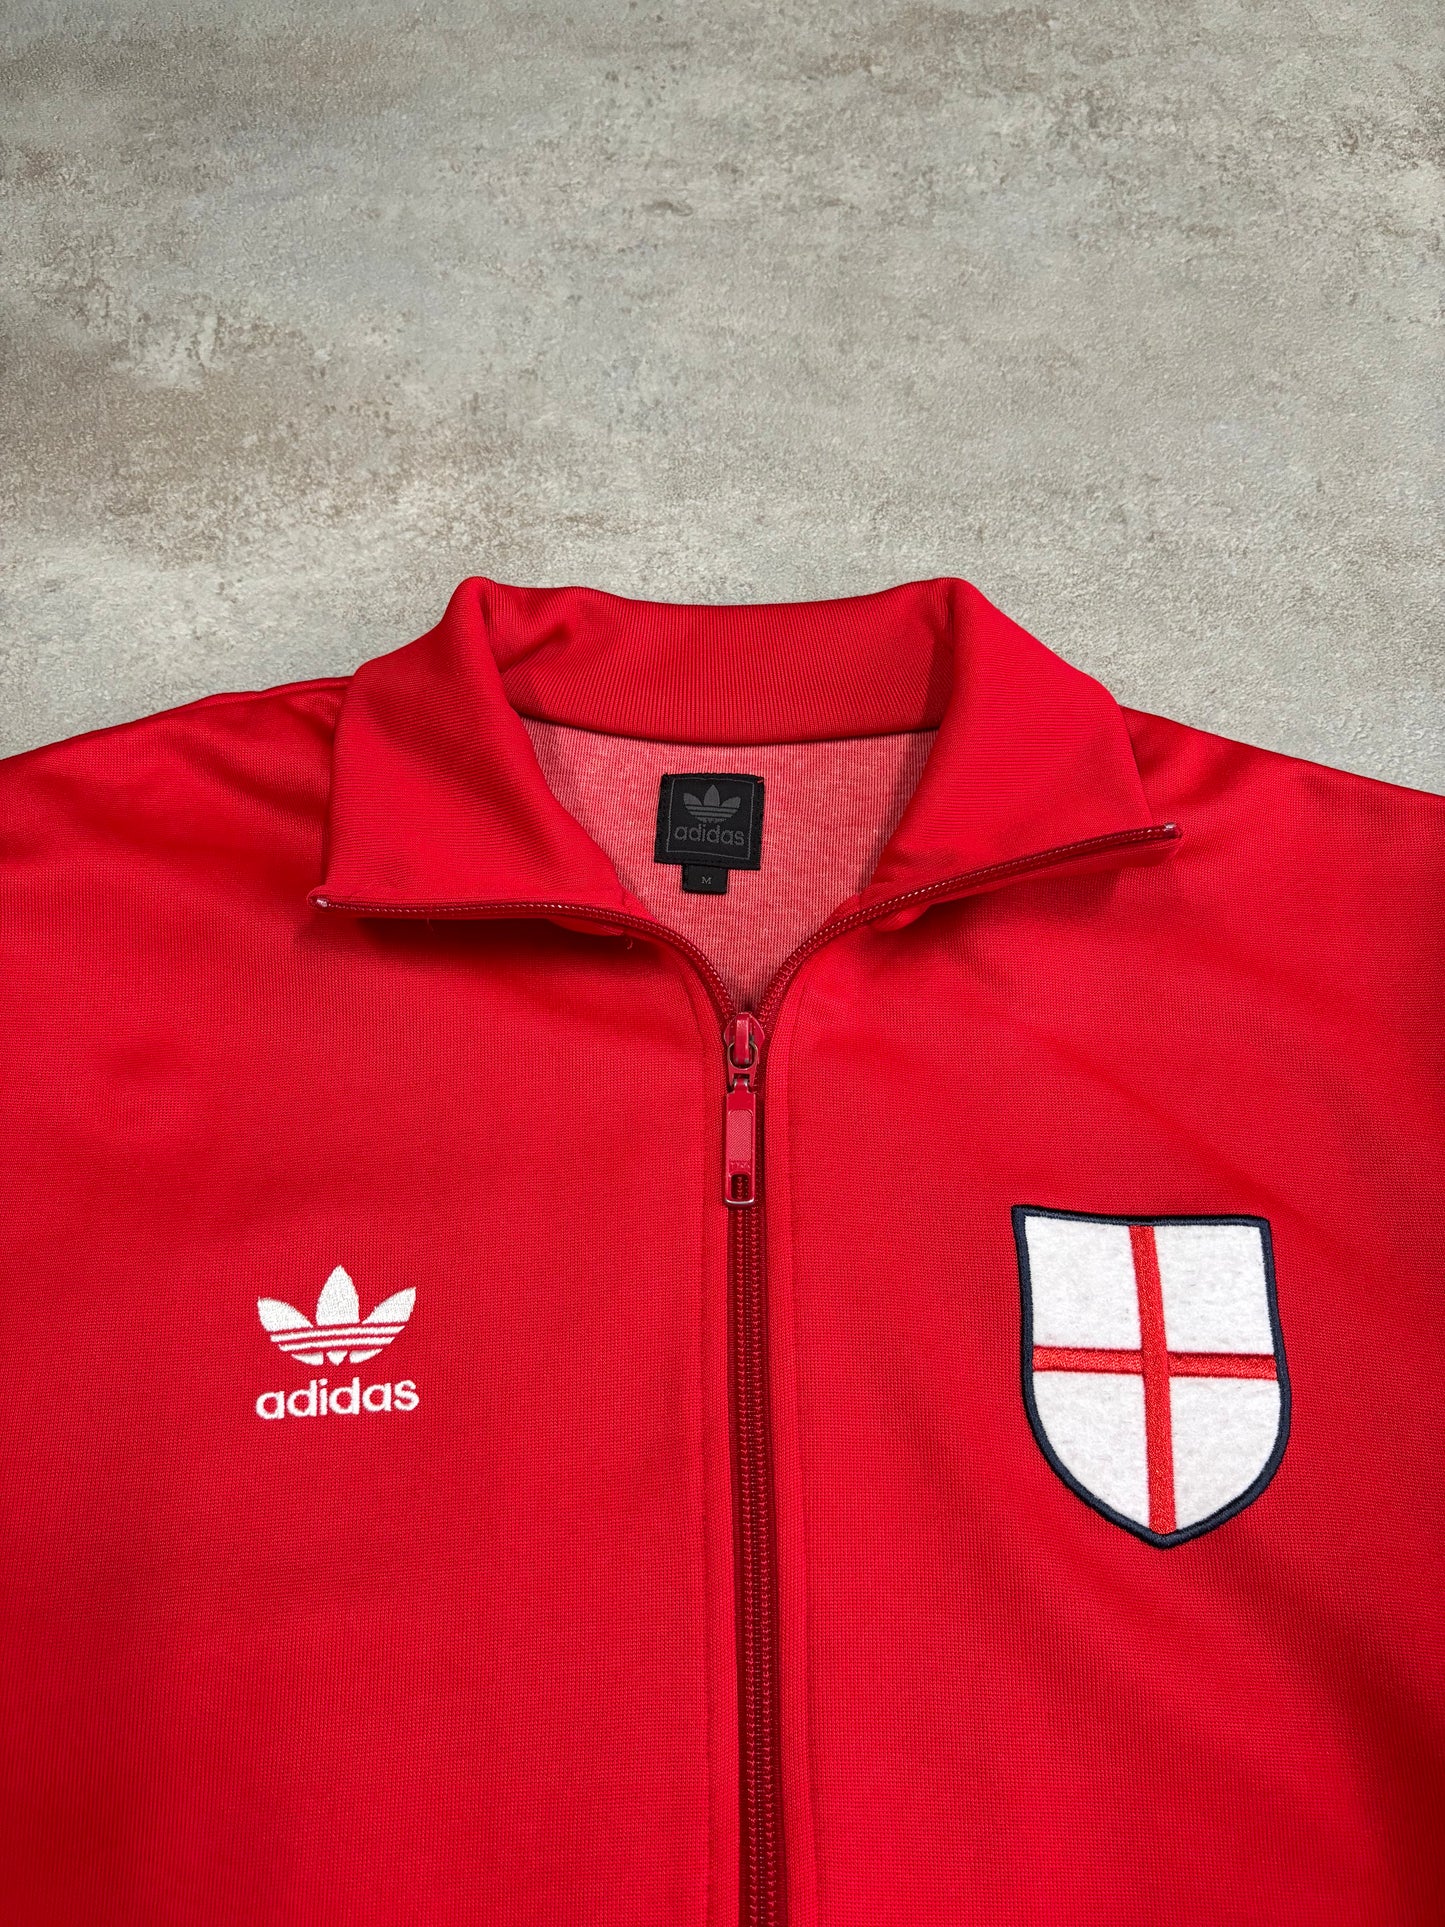 Adidas England World Cup 2006 Vintage Jacket - S